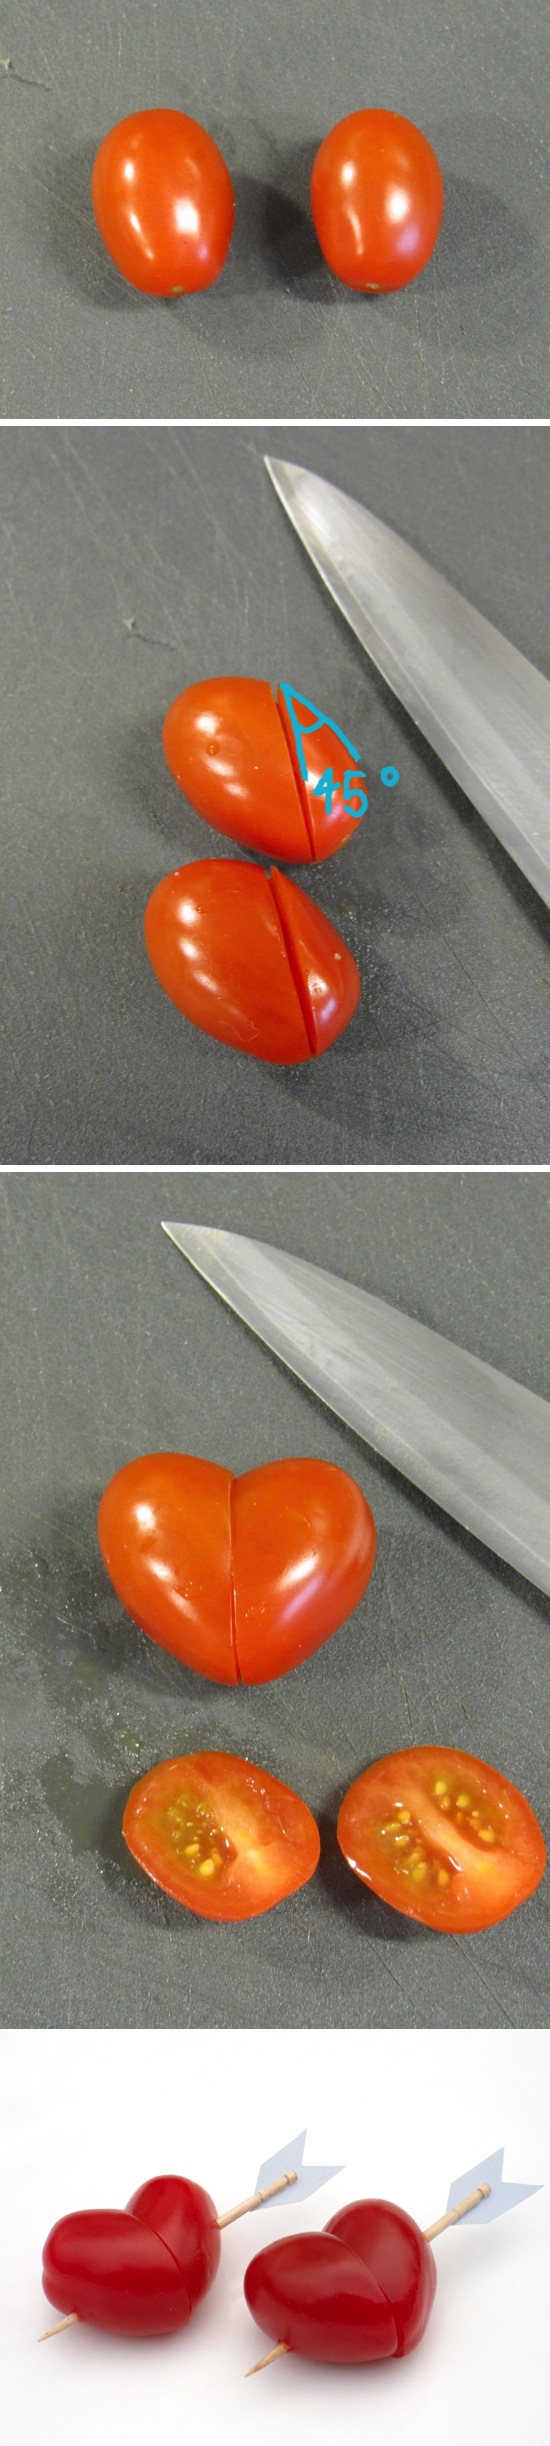 Heart Shaped Cherry Tomatoes